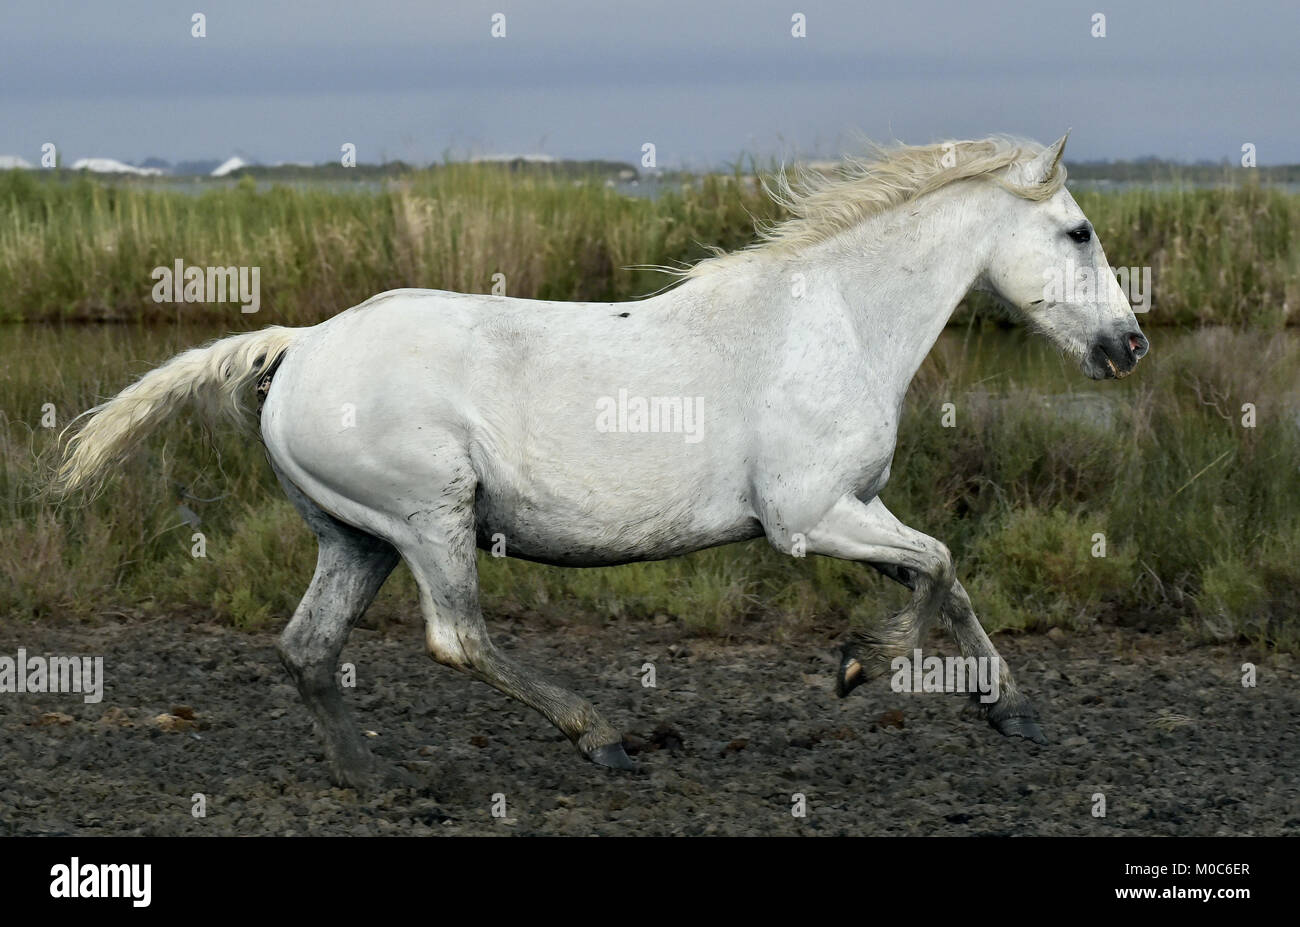 Portrait of the Running White Camargue Horse in Parc Regional de Camargue Stock Photo